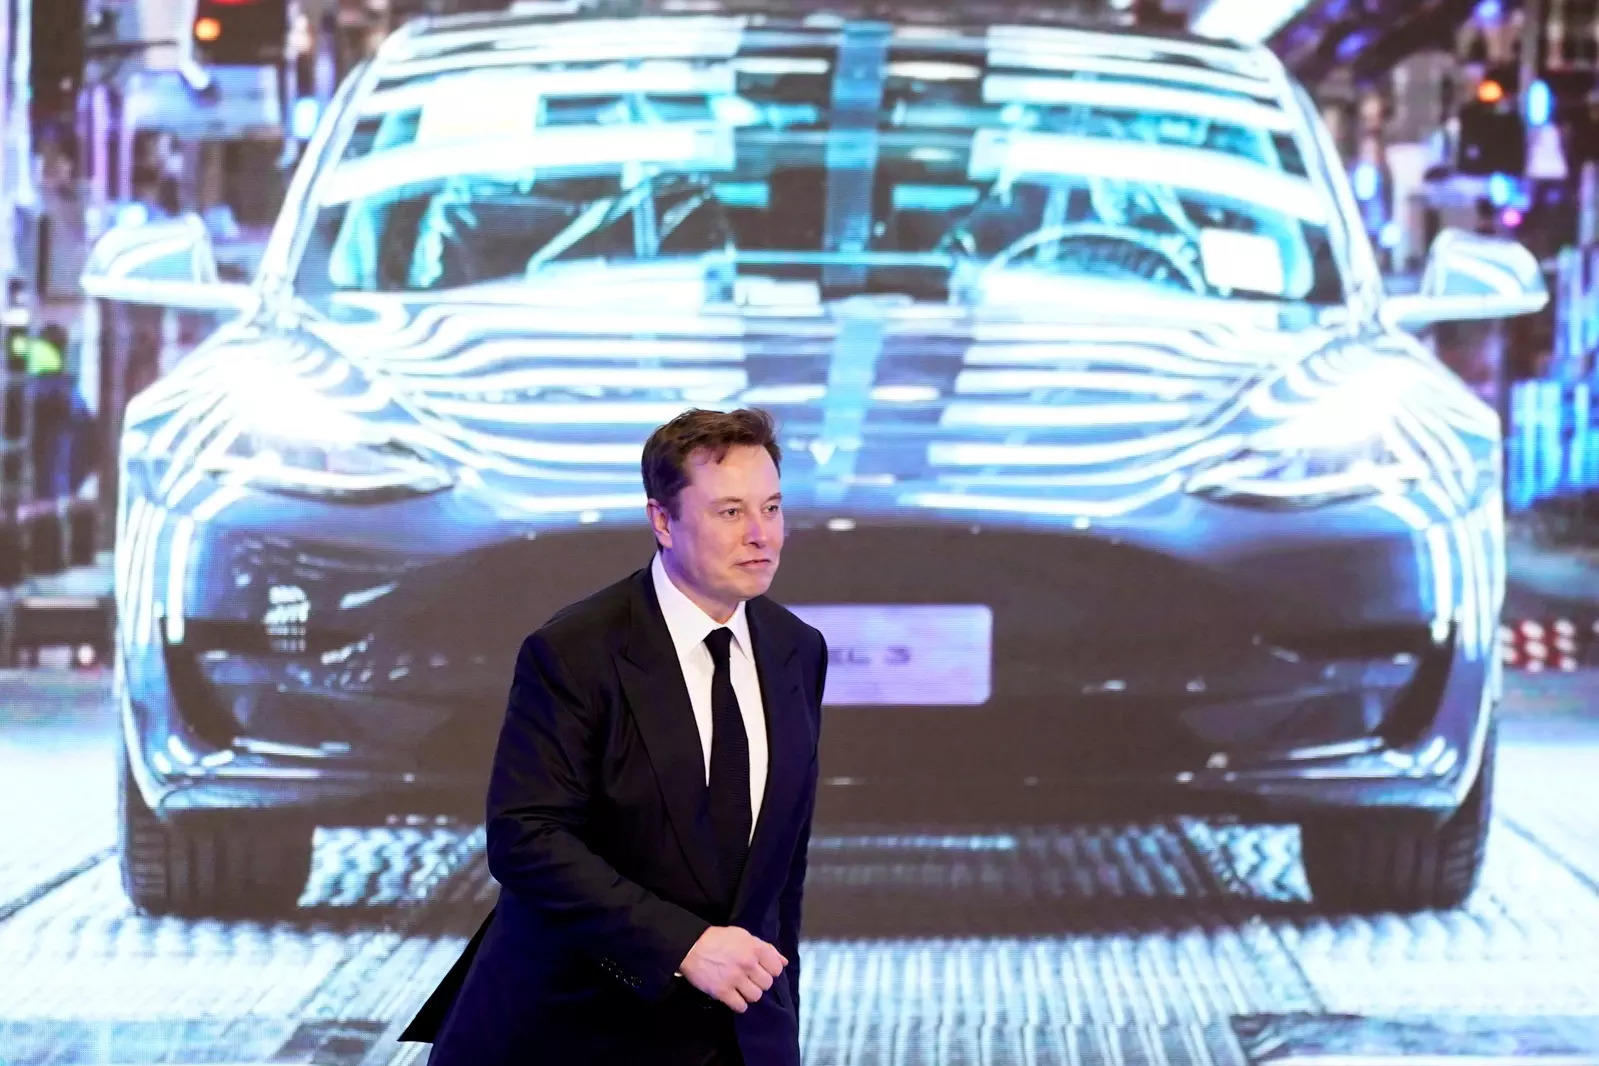 Maharashtra, Punjab, West Bengal, Telangana invite Tesla to set up shop after Musk tweet